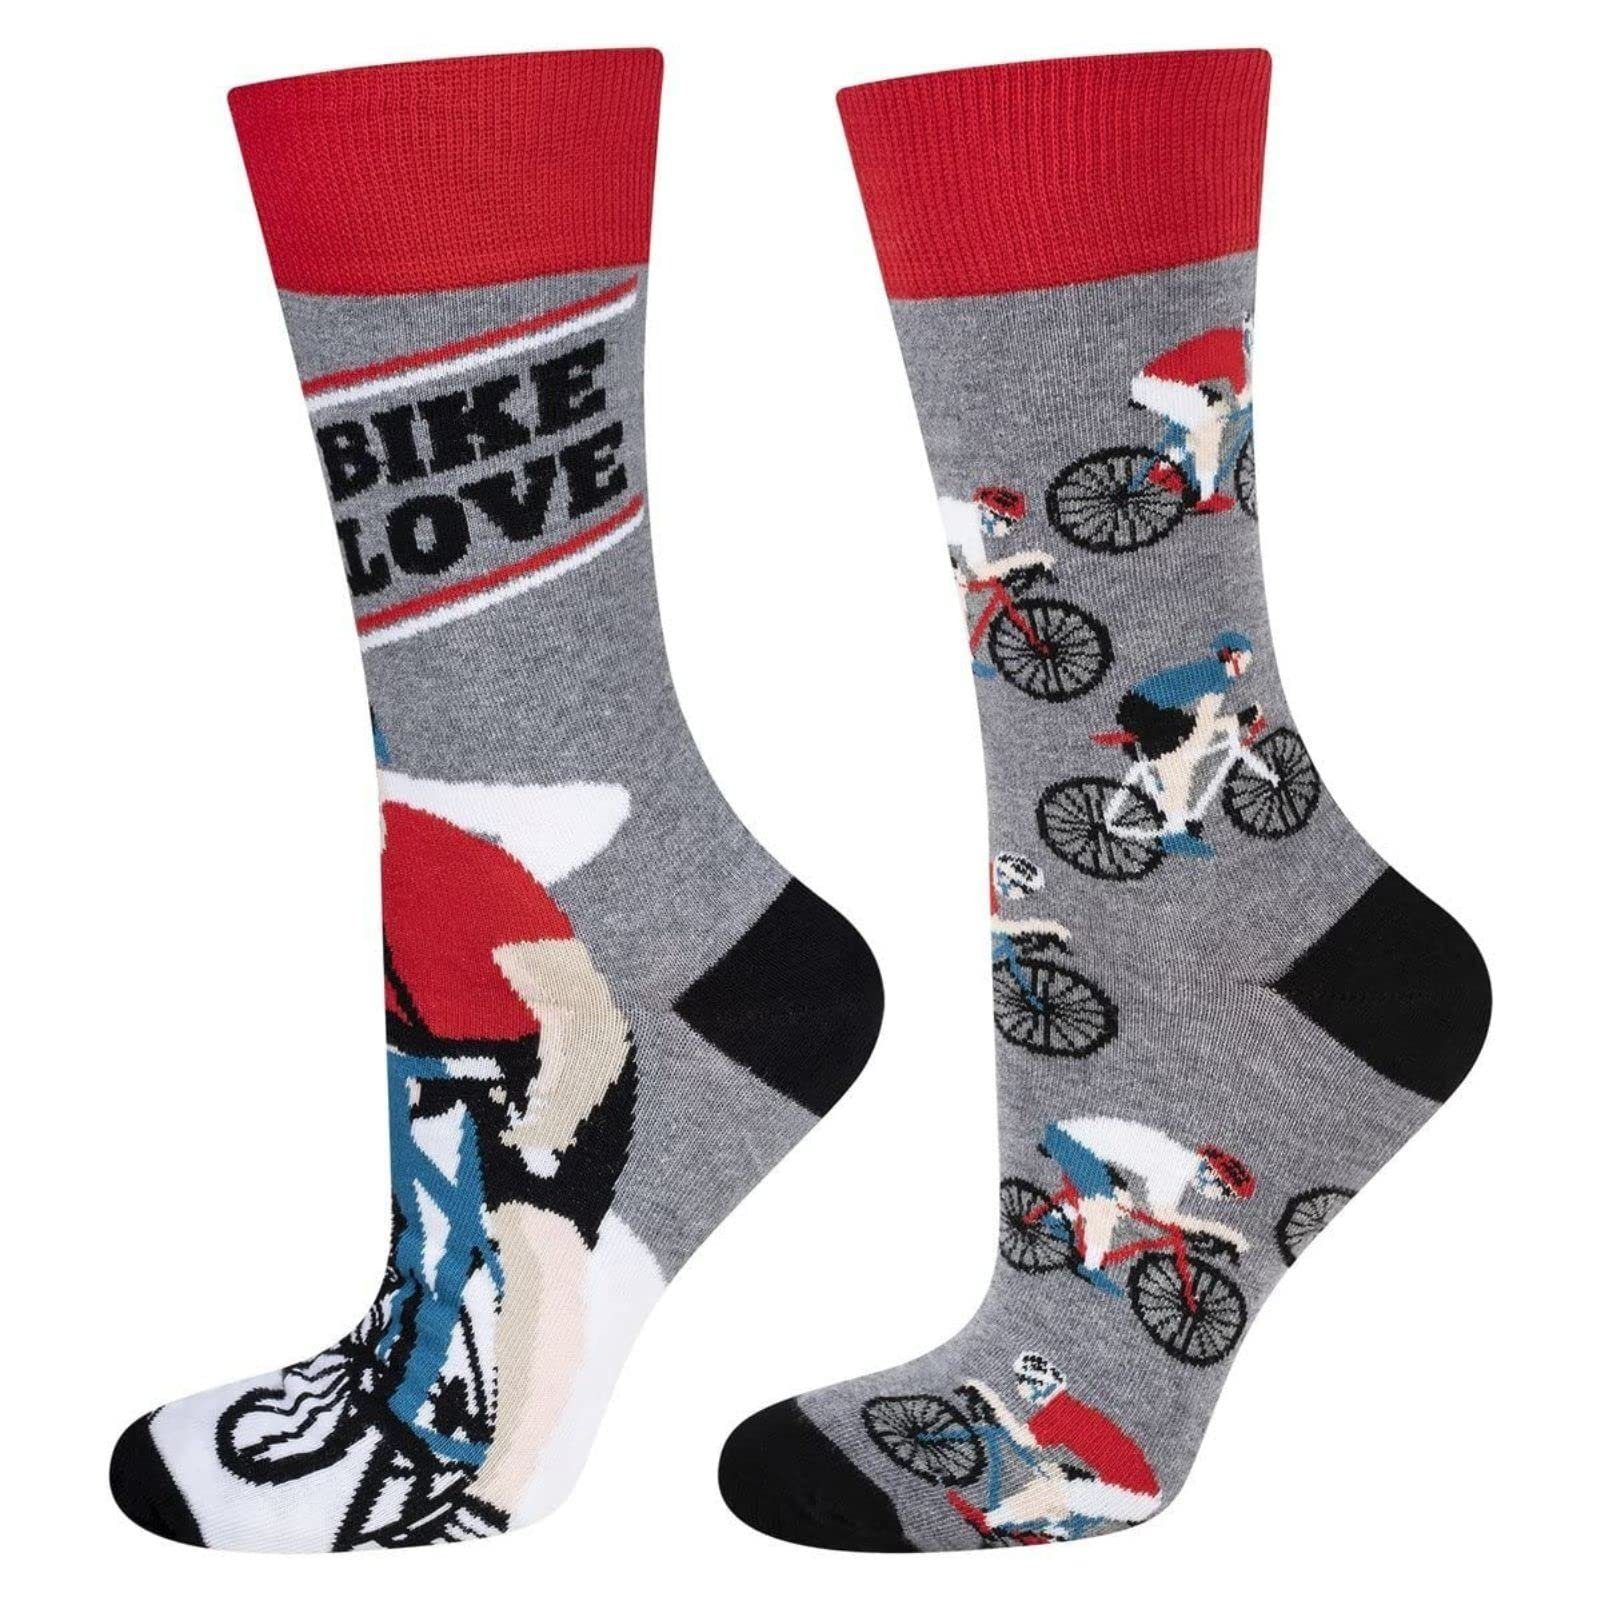 Soxo Socken Fahrrad Socken Herren (Paar, 1-Paar, Set) Lustige Geschenke Für Männer 40-45EU Fahrrad Grau